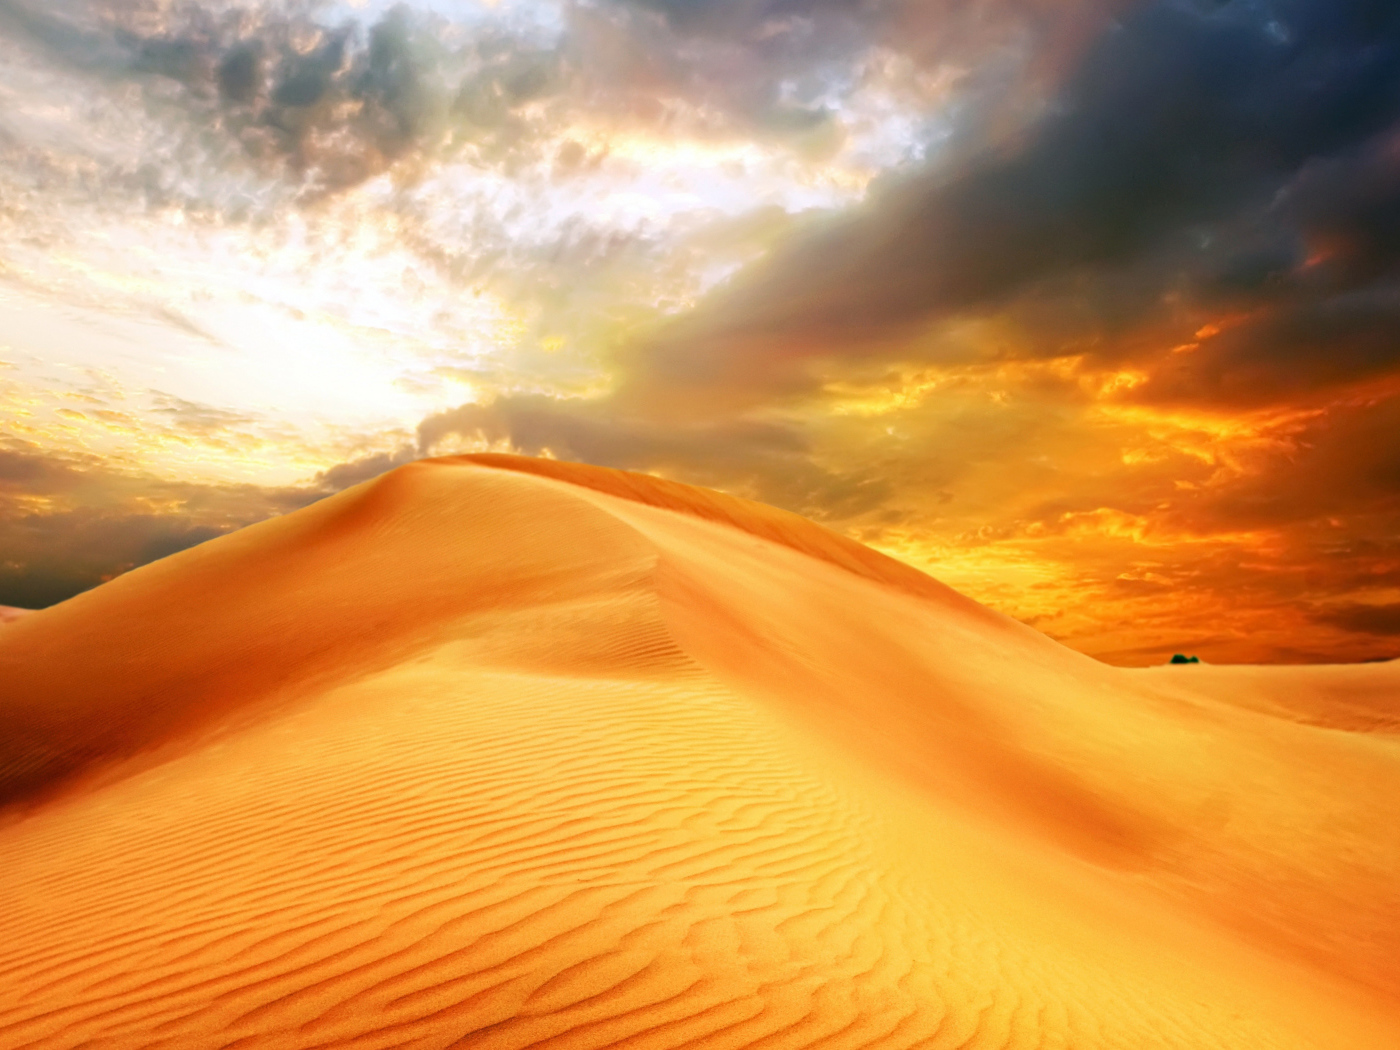 Песня солнце над барханами плывет. Пустыня. Пустыня пейзаж. Песчаный пейзаж. Rasfet v pustsne.